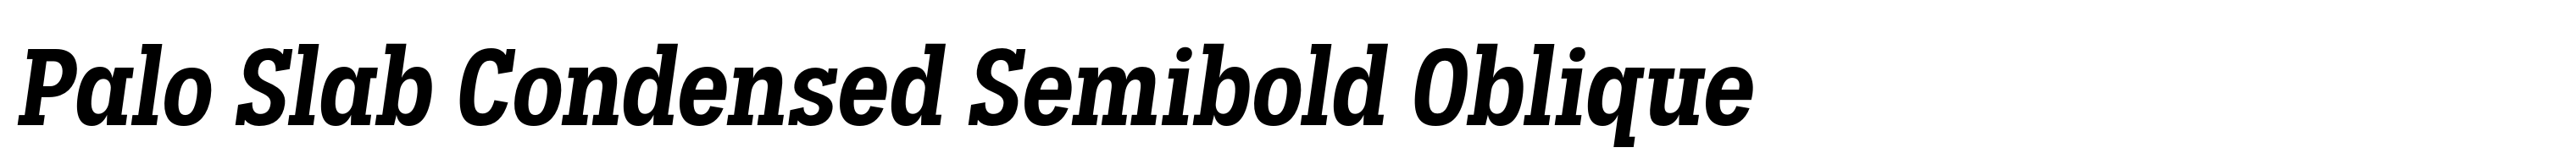 Palo Slab Condensed Semibold Oblique